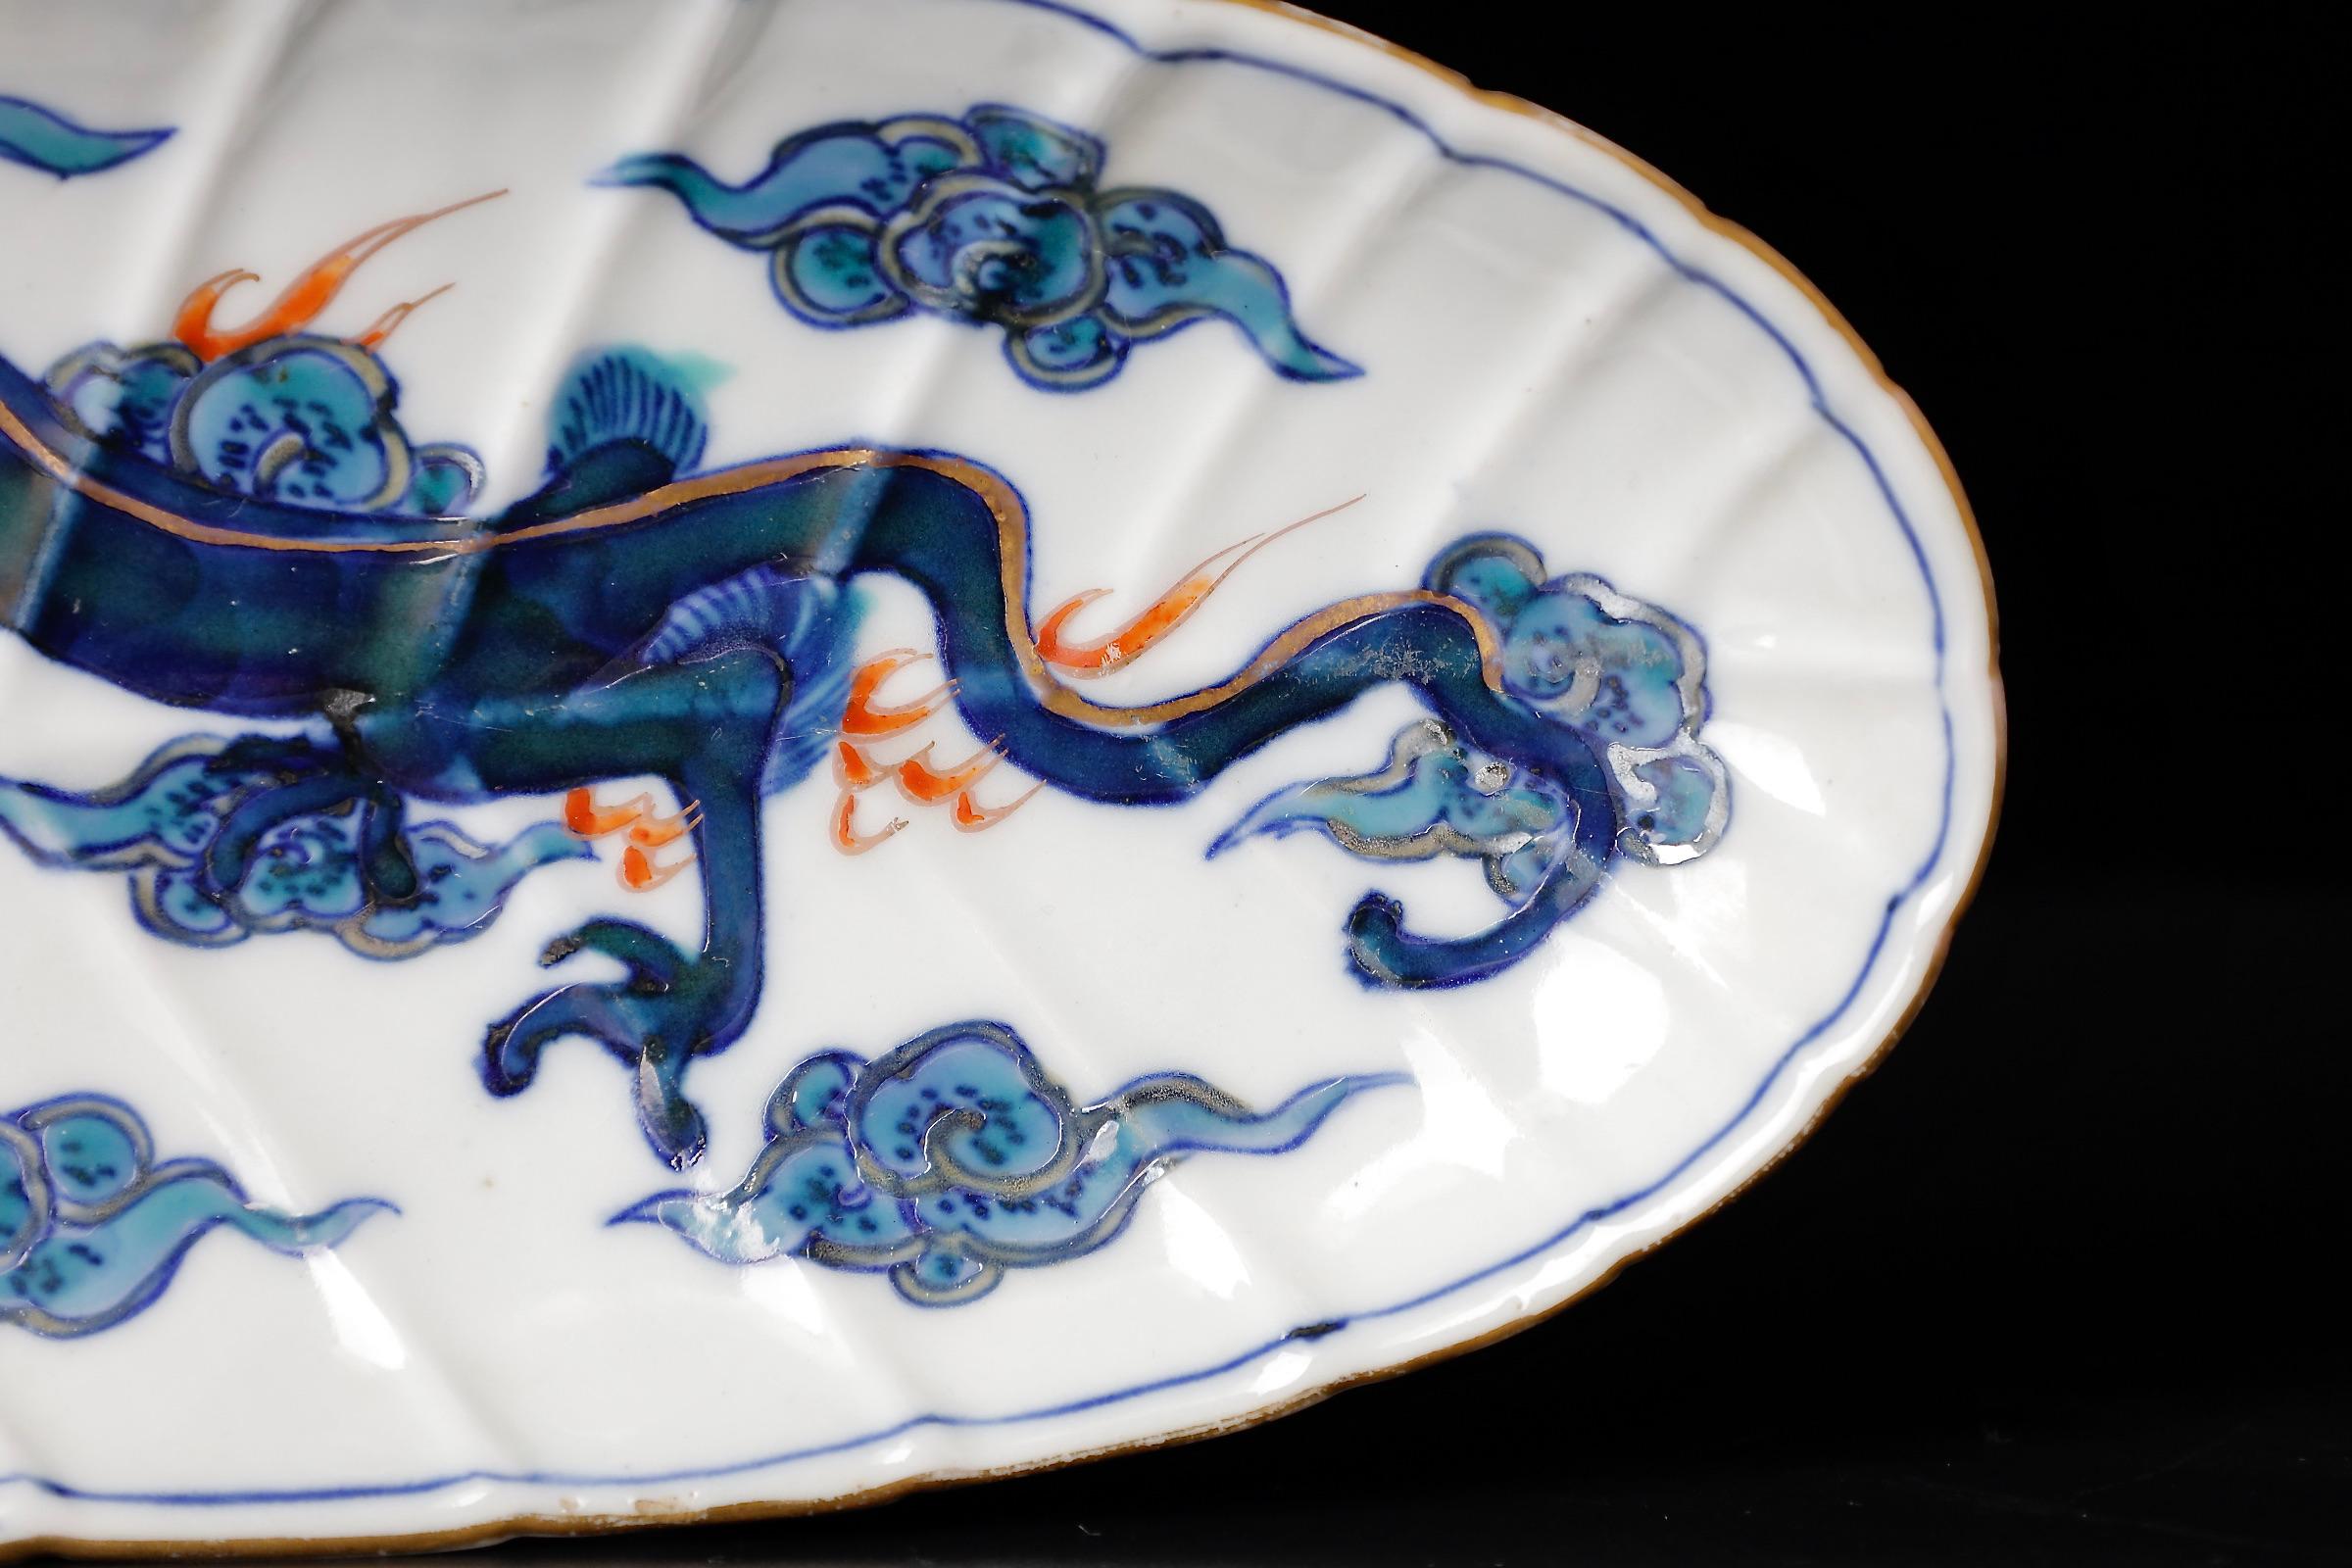 18th Century and Earlier Set '10 Pc.' of Edo Period Imari Porcelain Plates with Dragon Motive